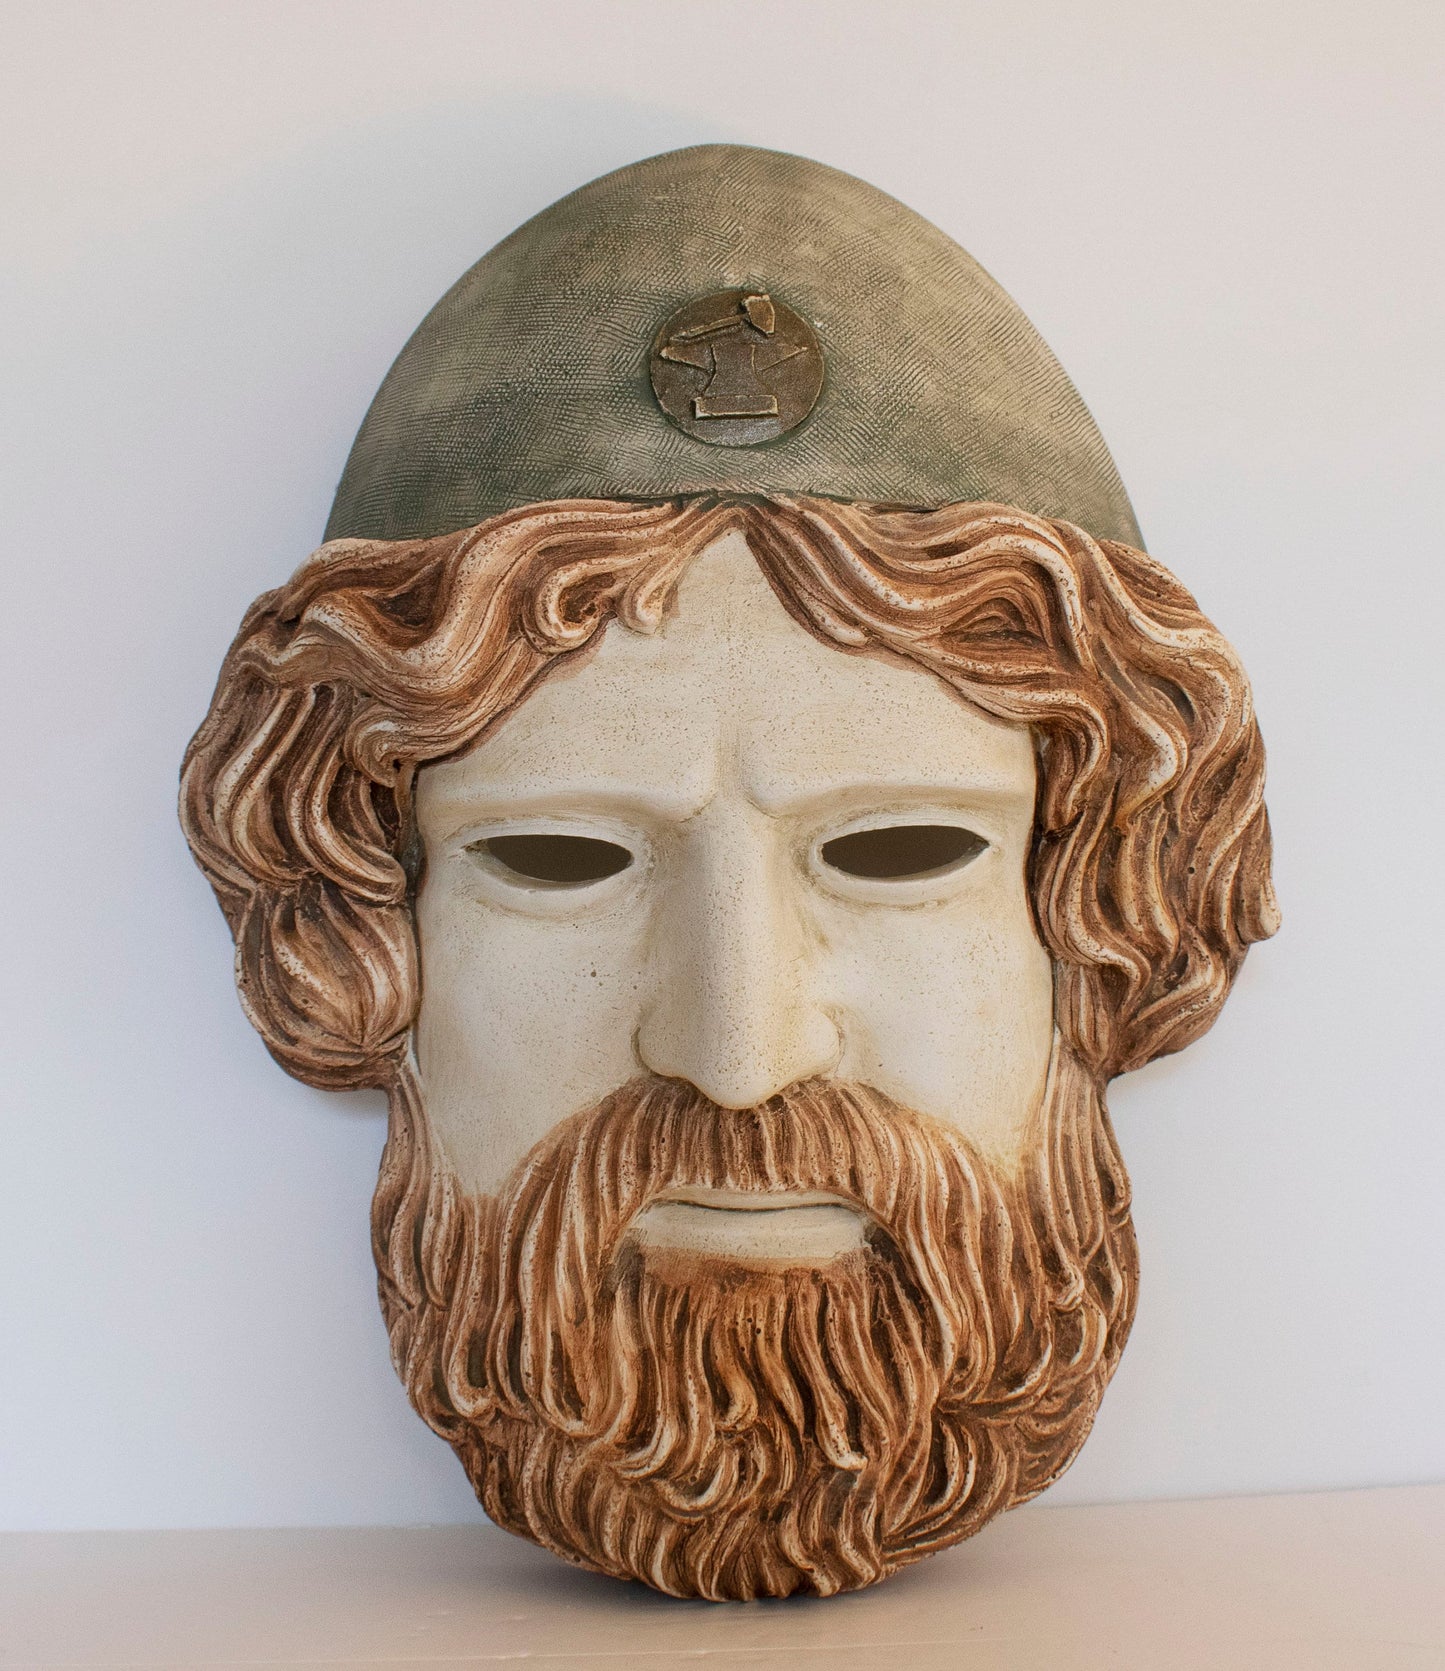 Hephaestus Vulcan Mask - Greek Roman God of Blacksmiths, Metalworking, Craftsmen, Artisans, Fire and Volcanoes - Wall Decoration